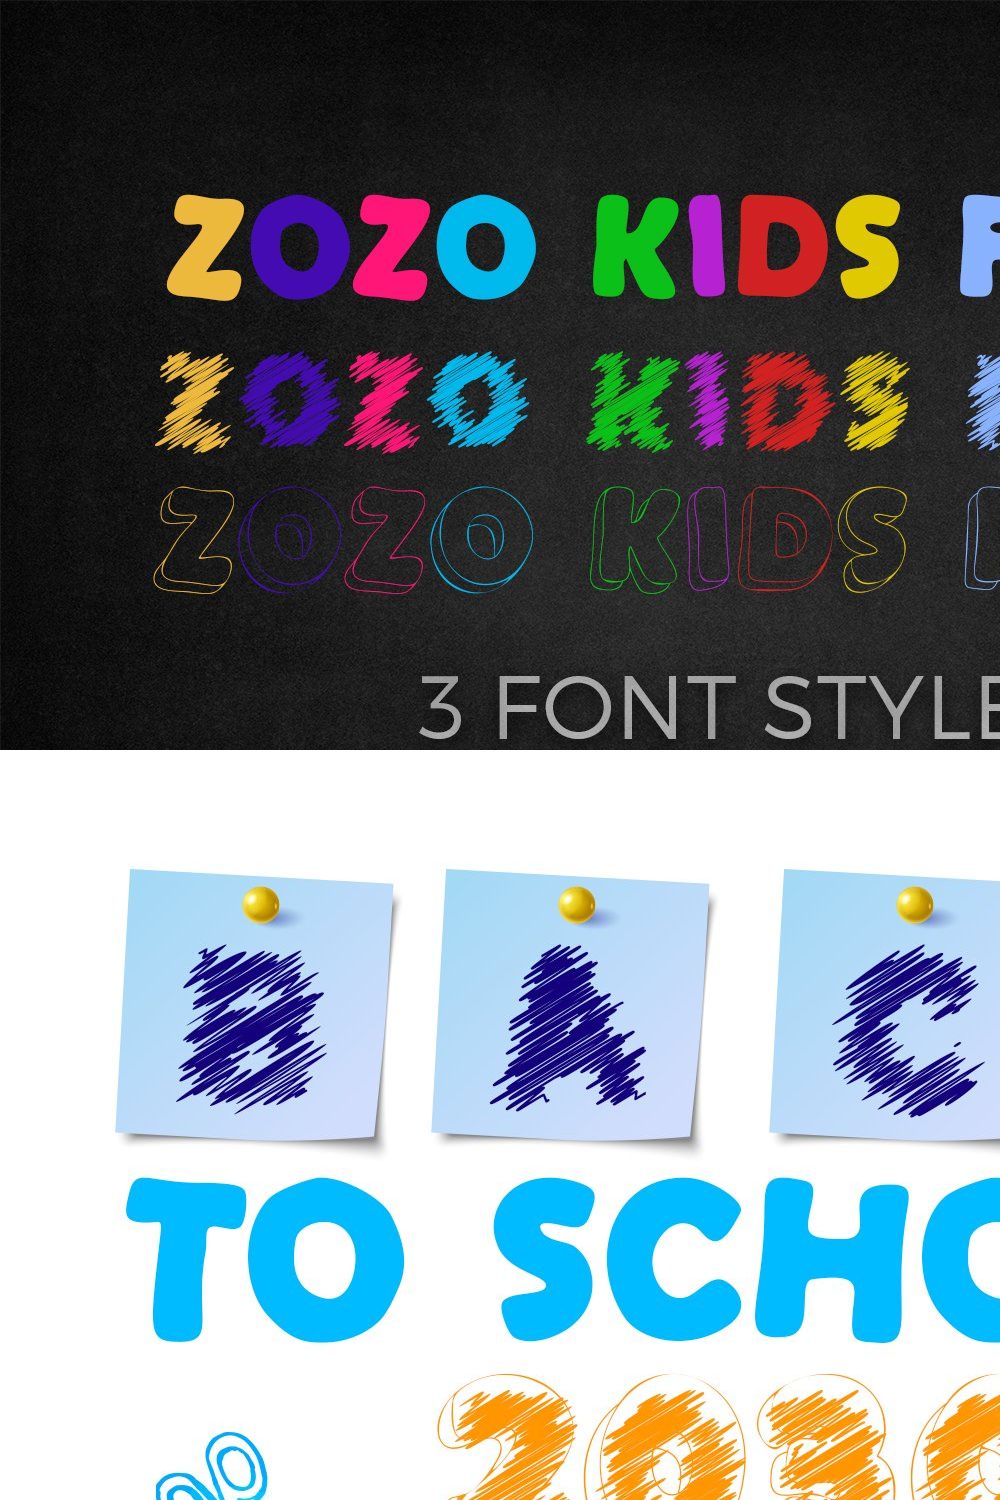 ZoZo Kids Font pinterest preview image.